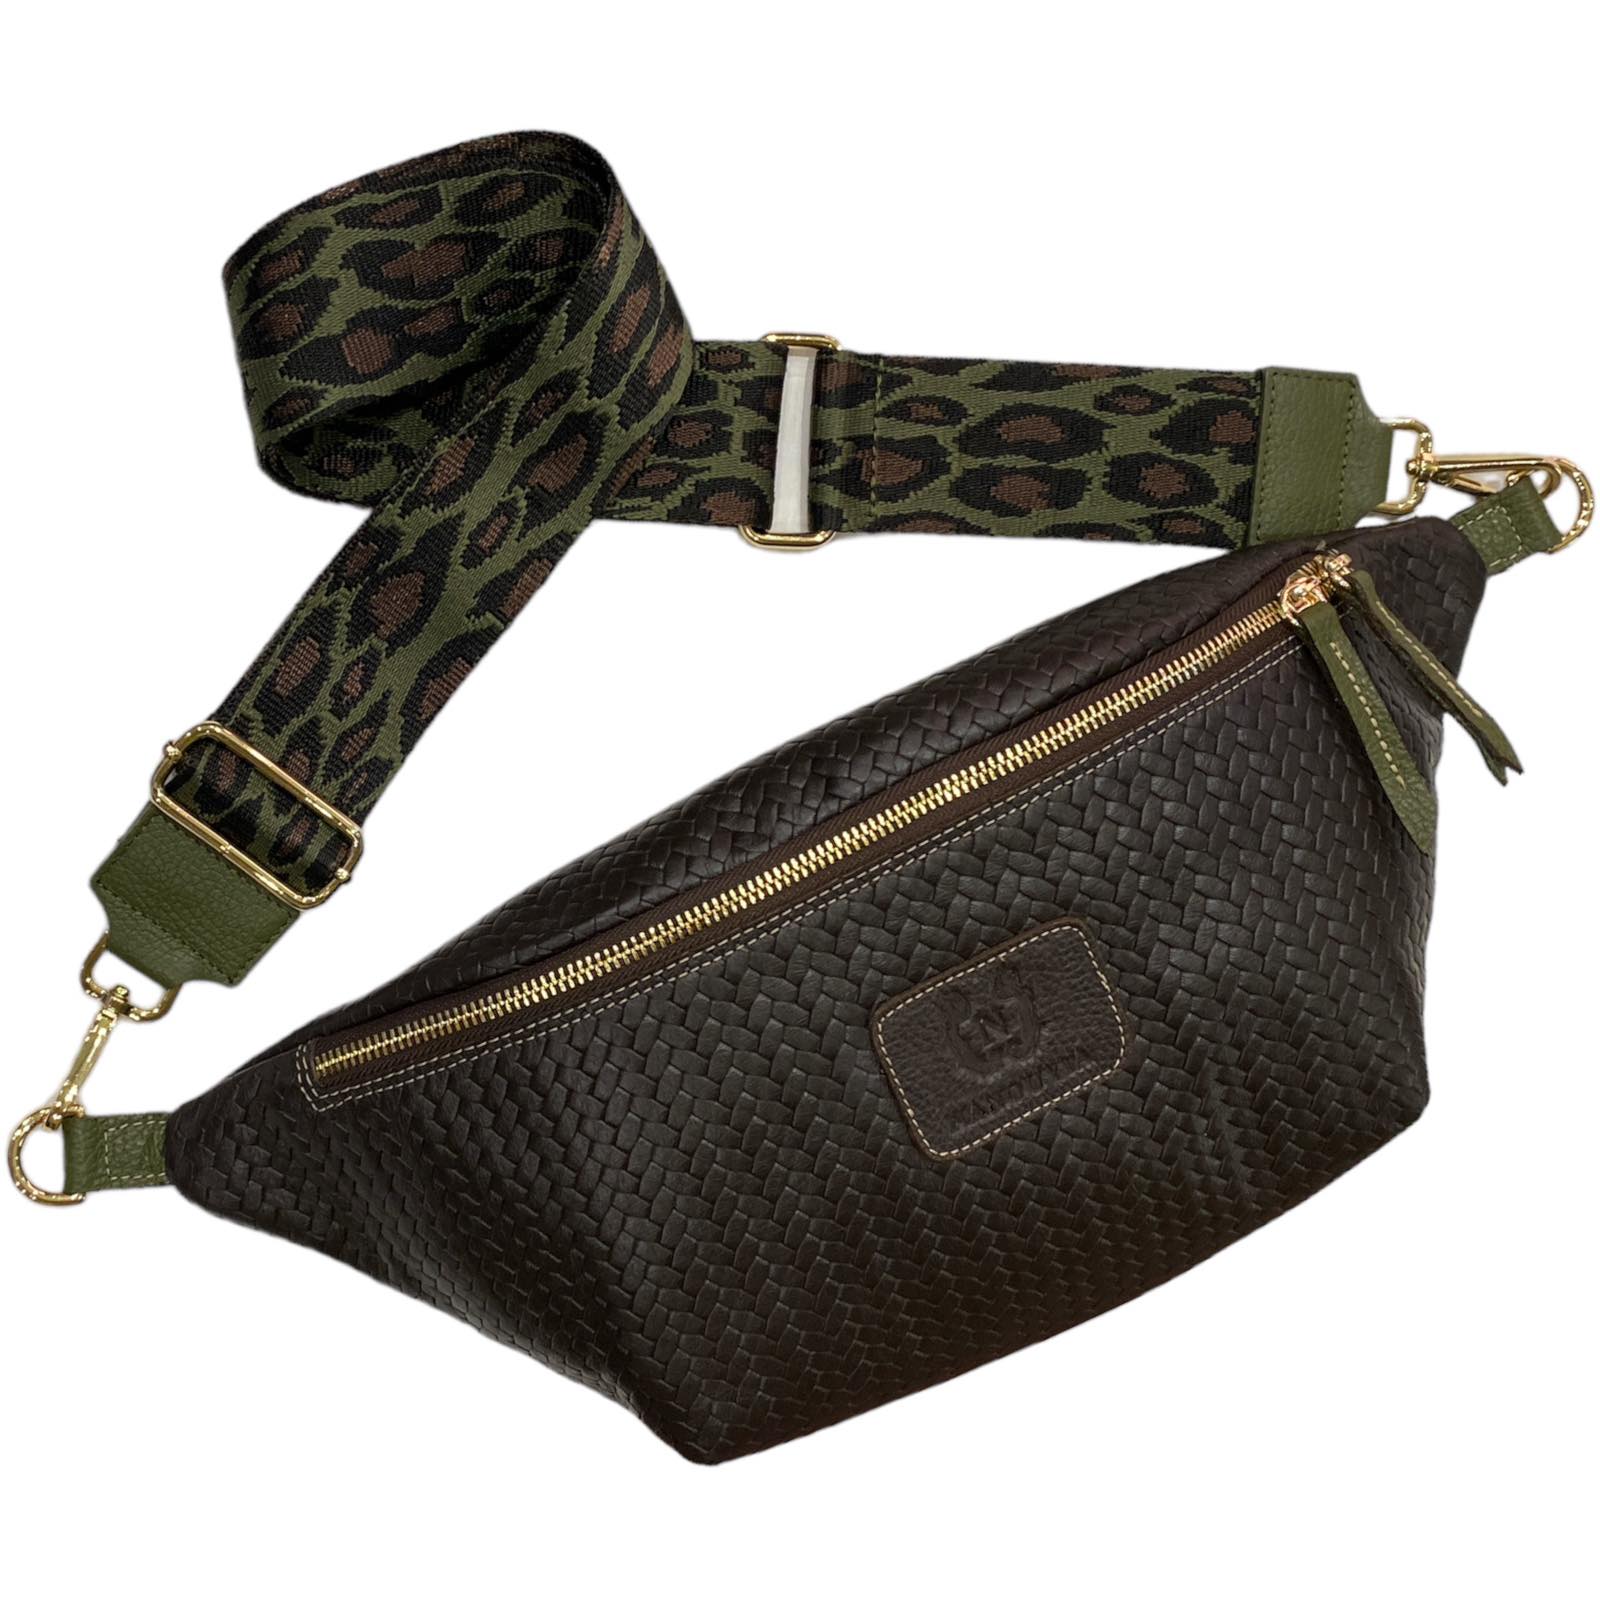 XL brown leather belt bag with olive green details